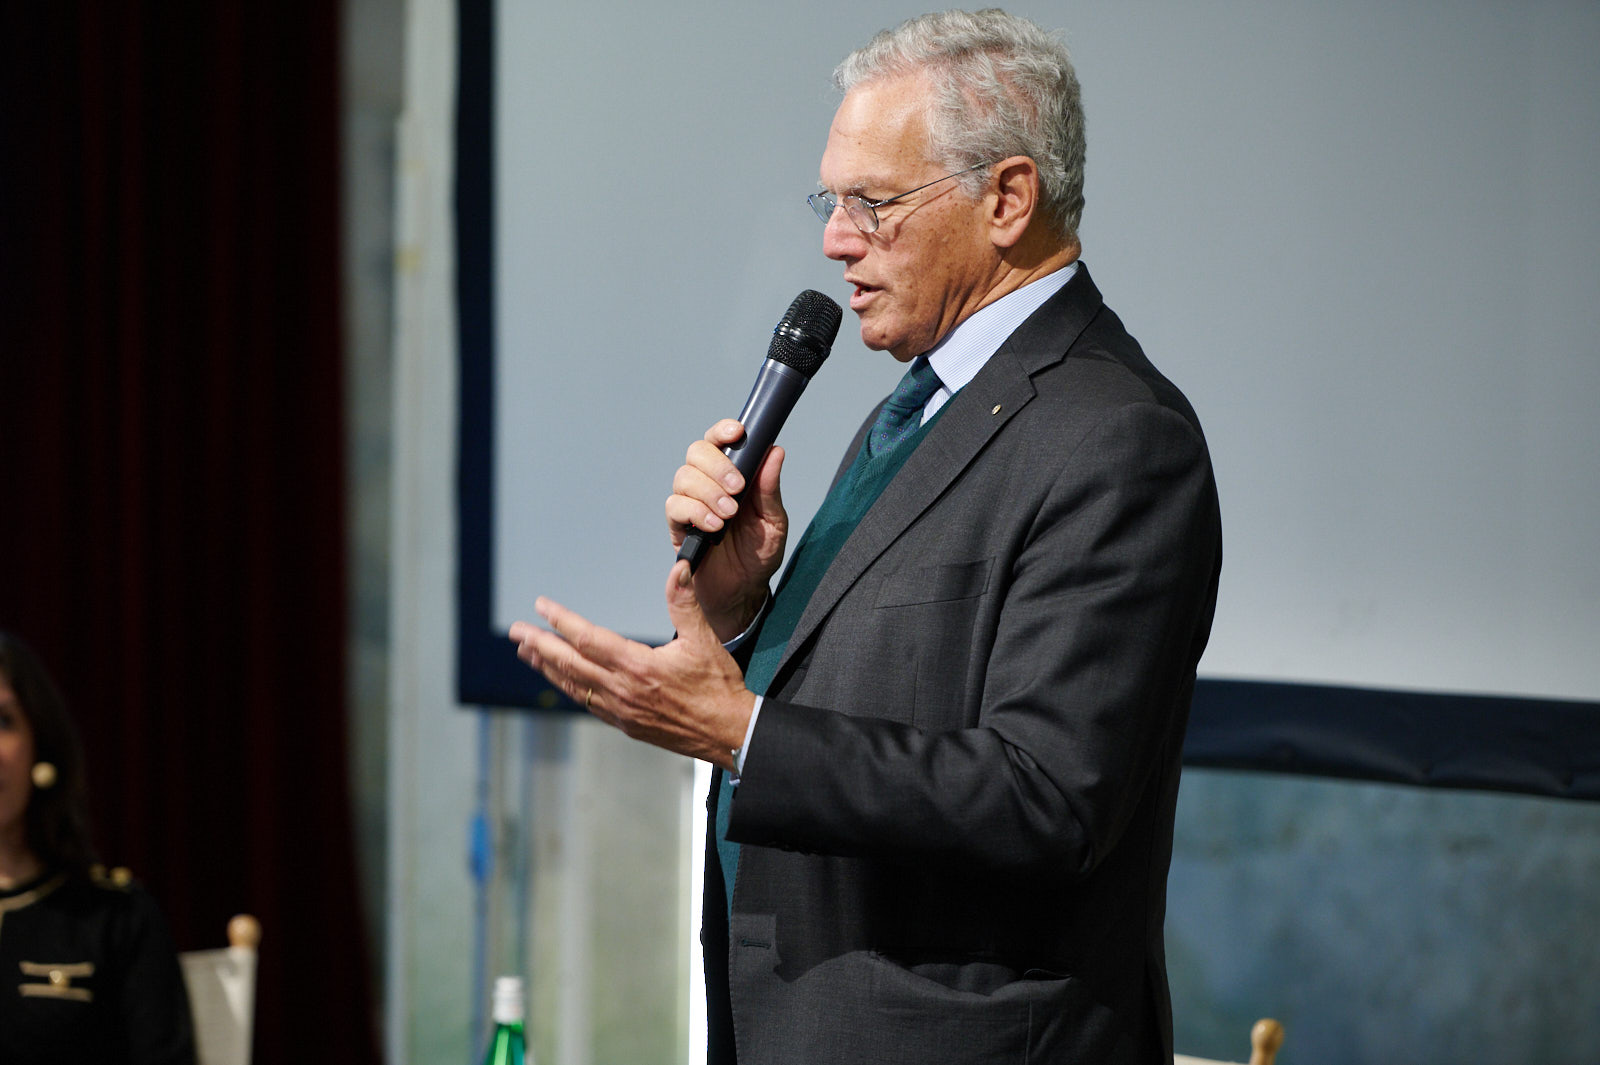 Roberto Jarach, President of the Shoah Memorial Foundation